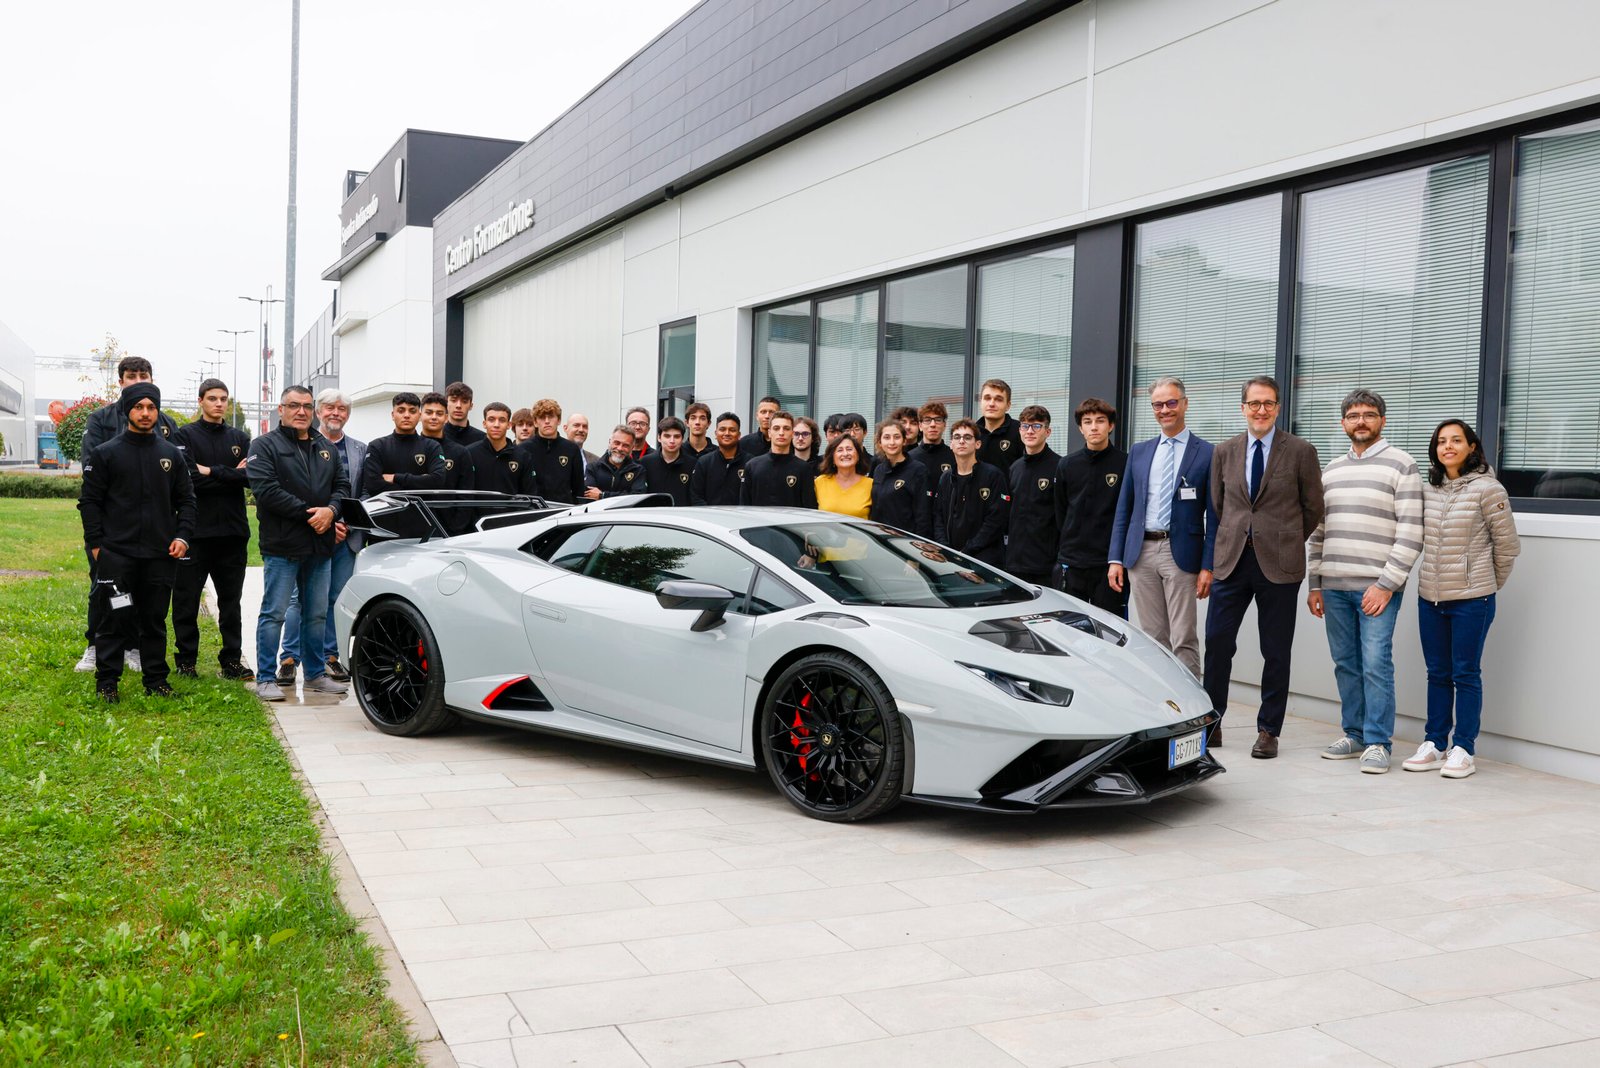 Automobili Lamborghini confirms DESI project, now in its fifth year